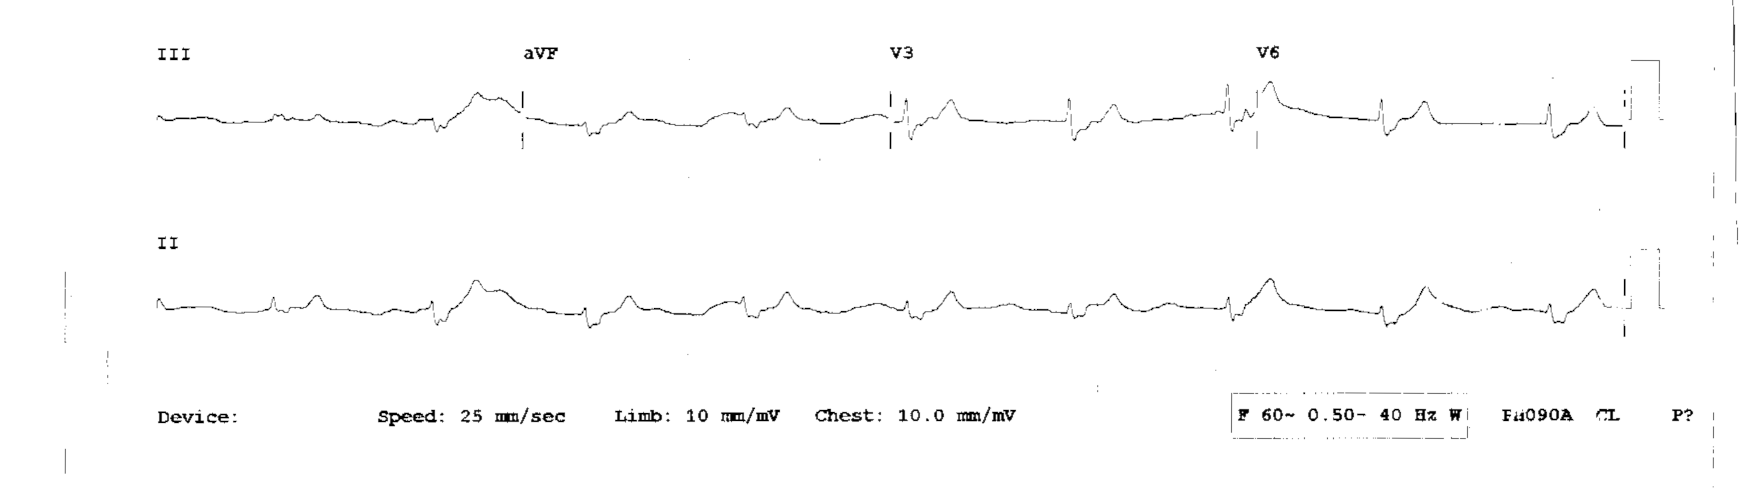 Example of low quality EKG photocopy.